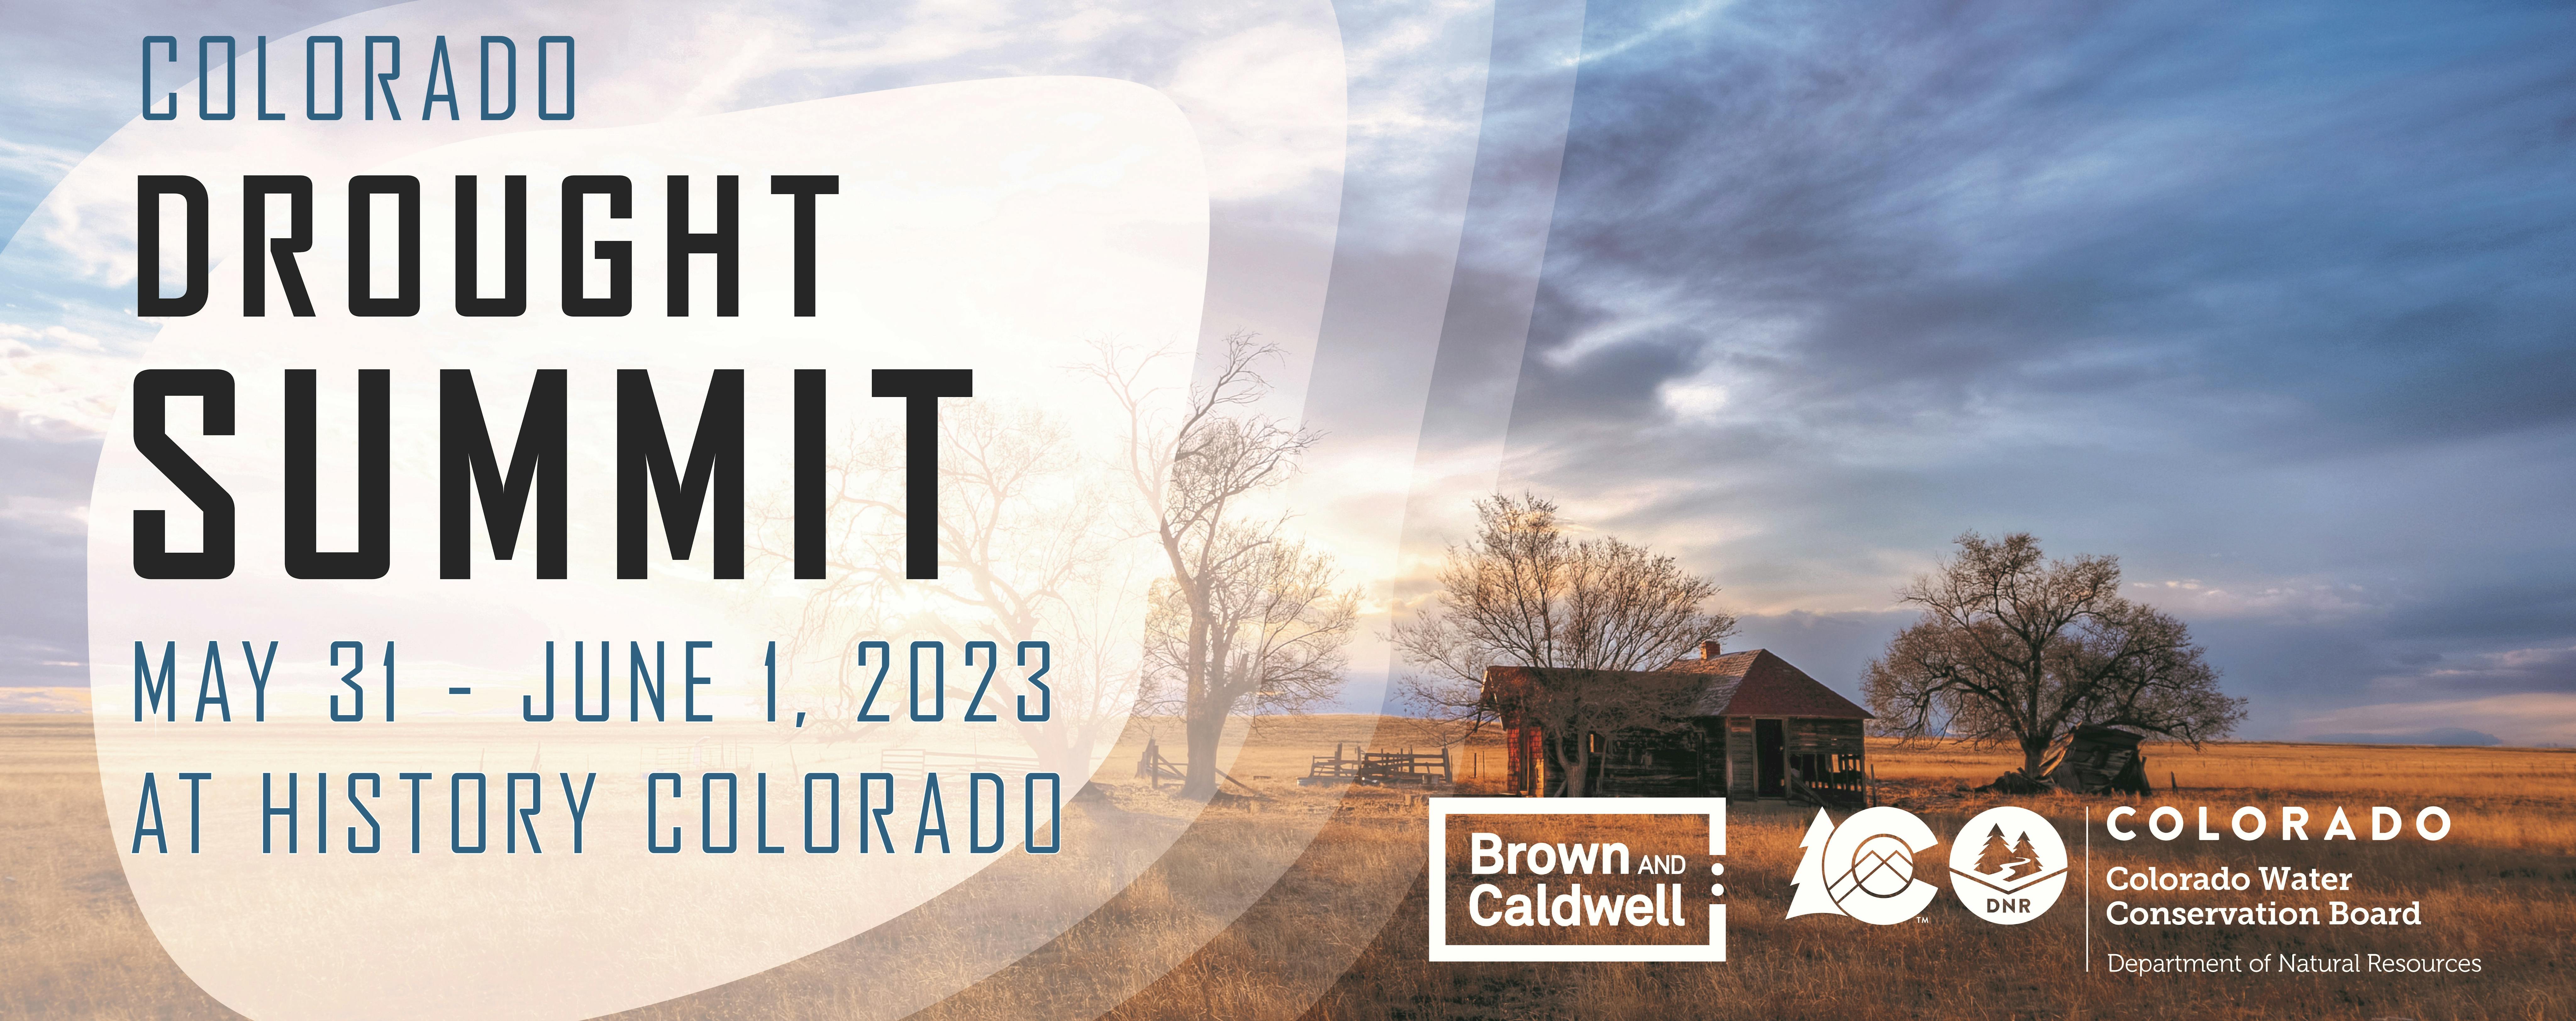 Colorado Drought Summit Banner